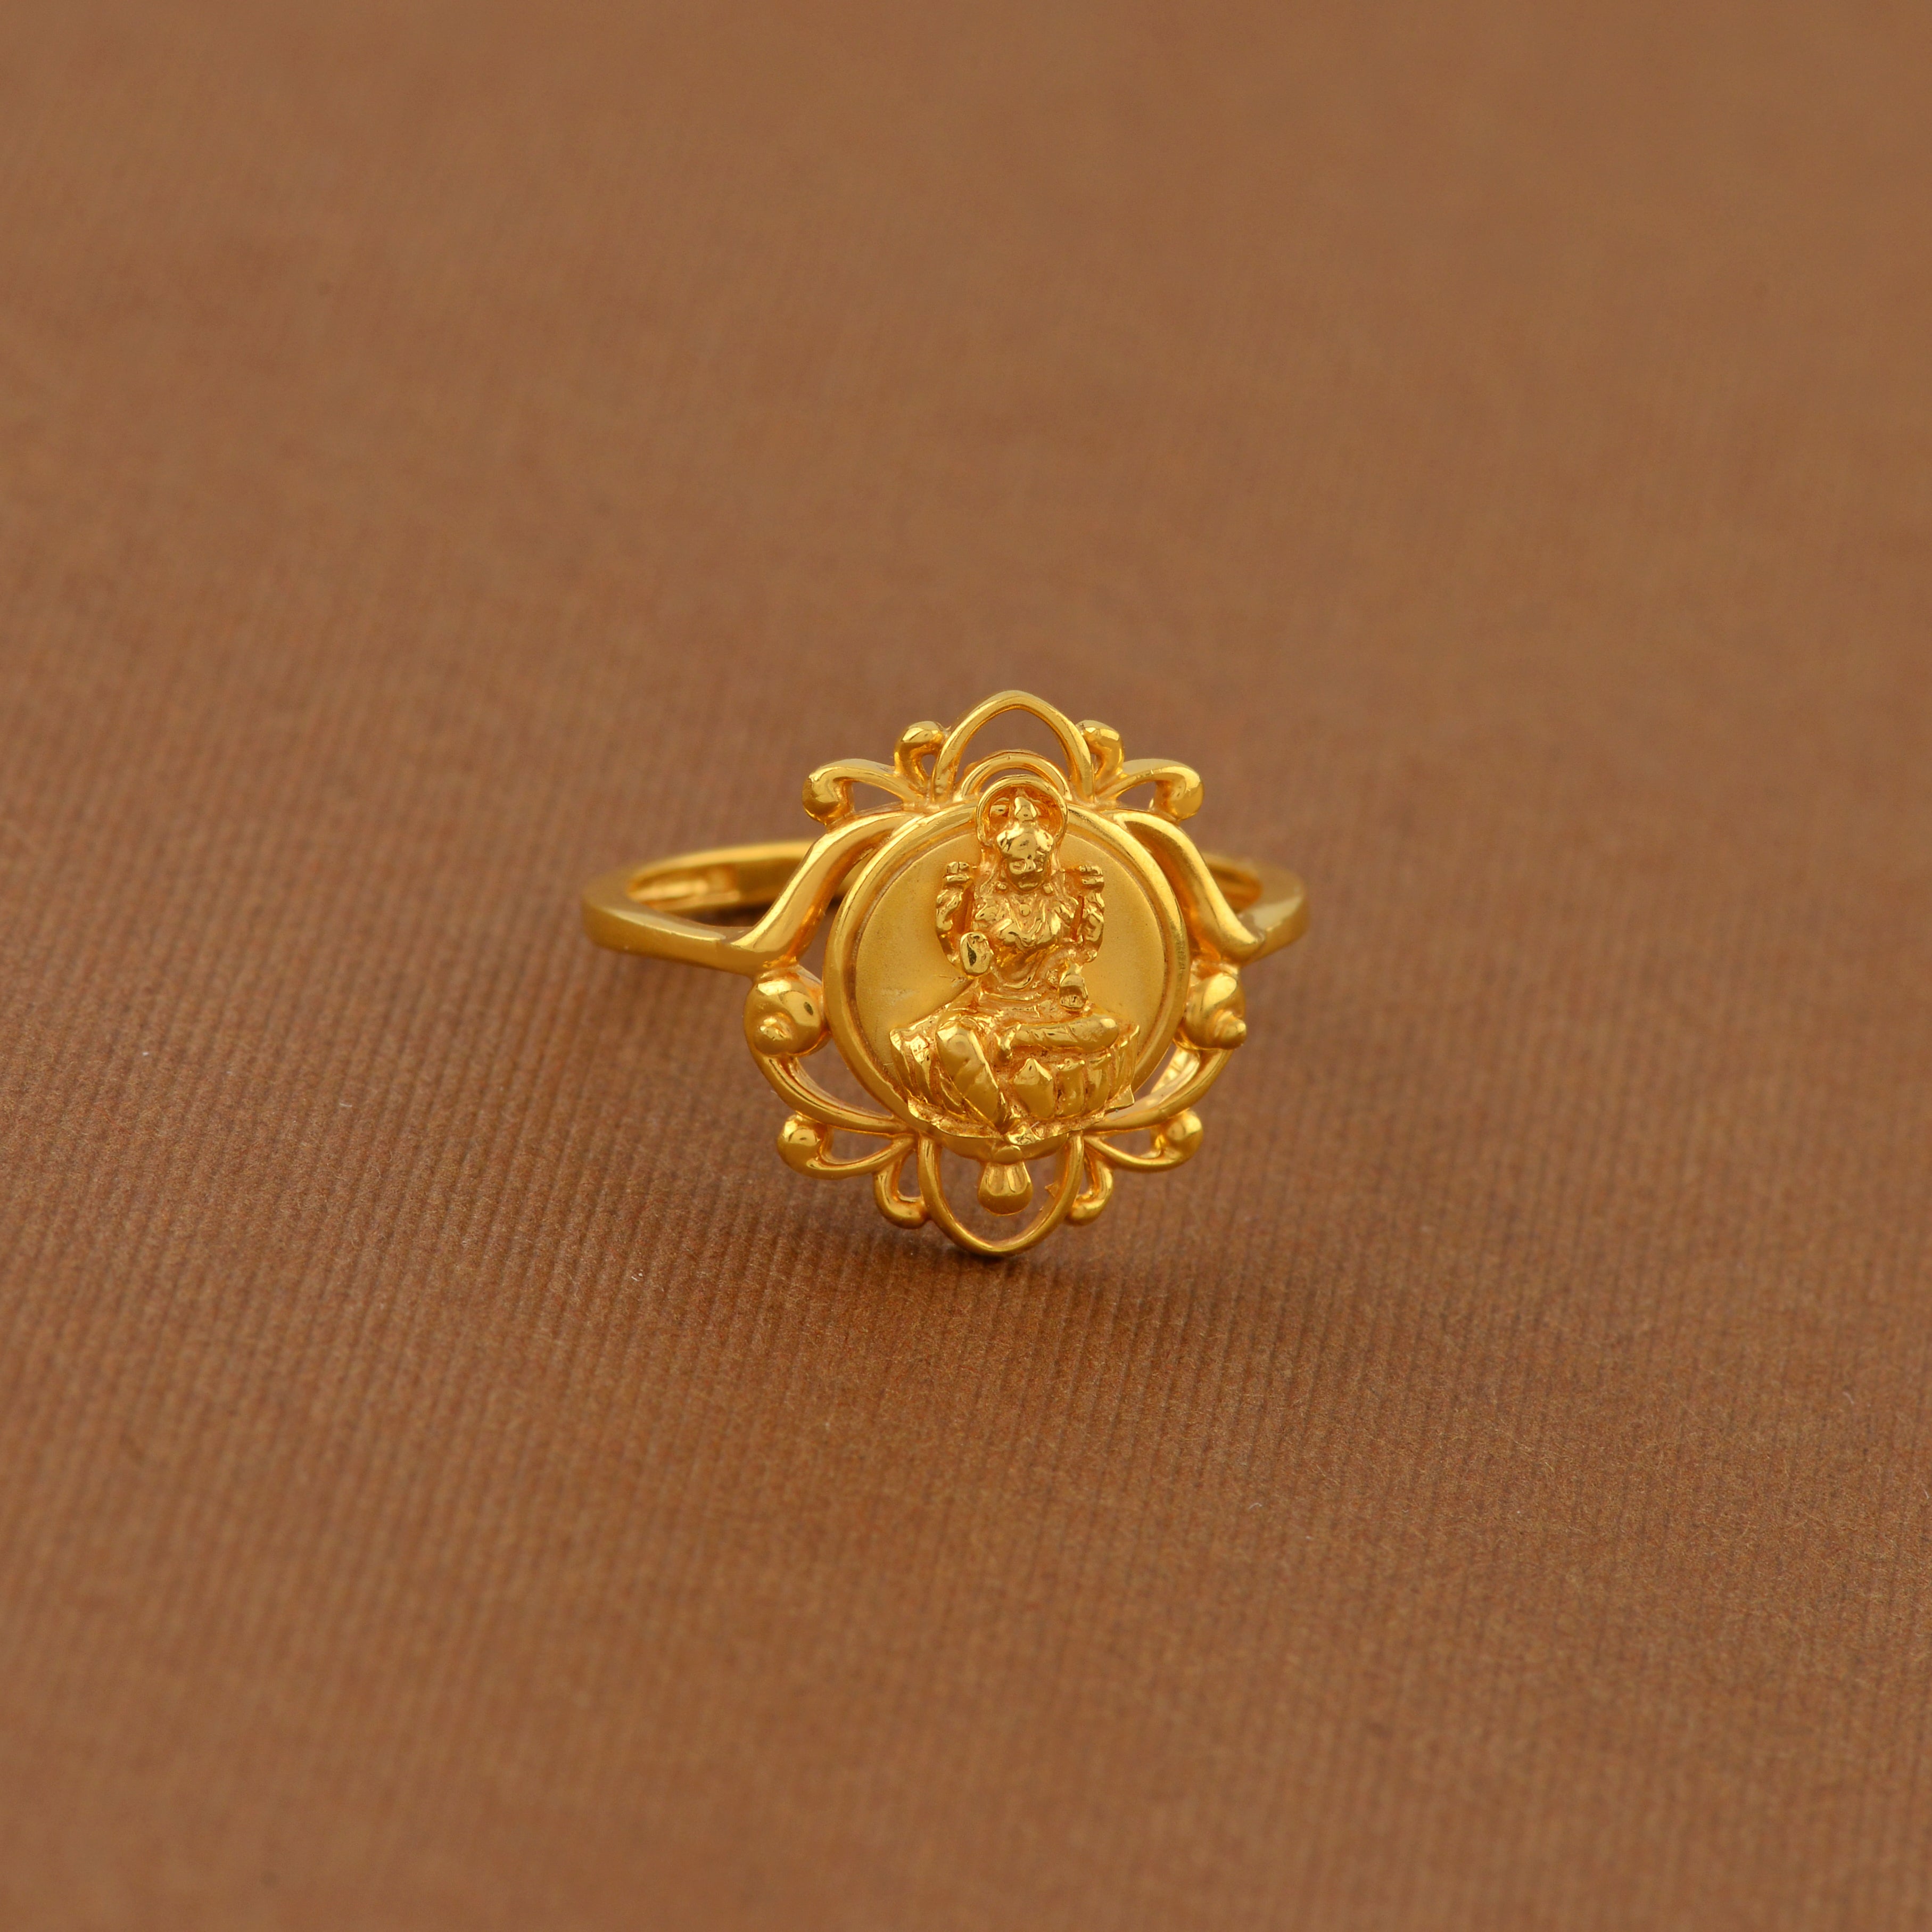 22K Gold 'Lakshmi' Ring For Women with Cz - 235-GR5973 in 3.650 Grams